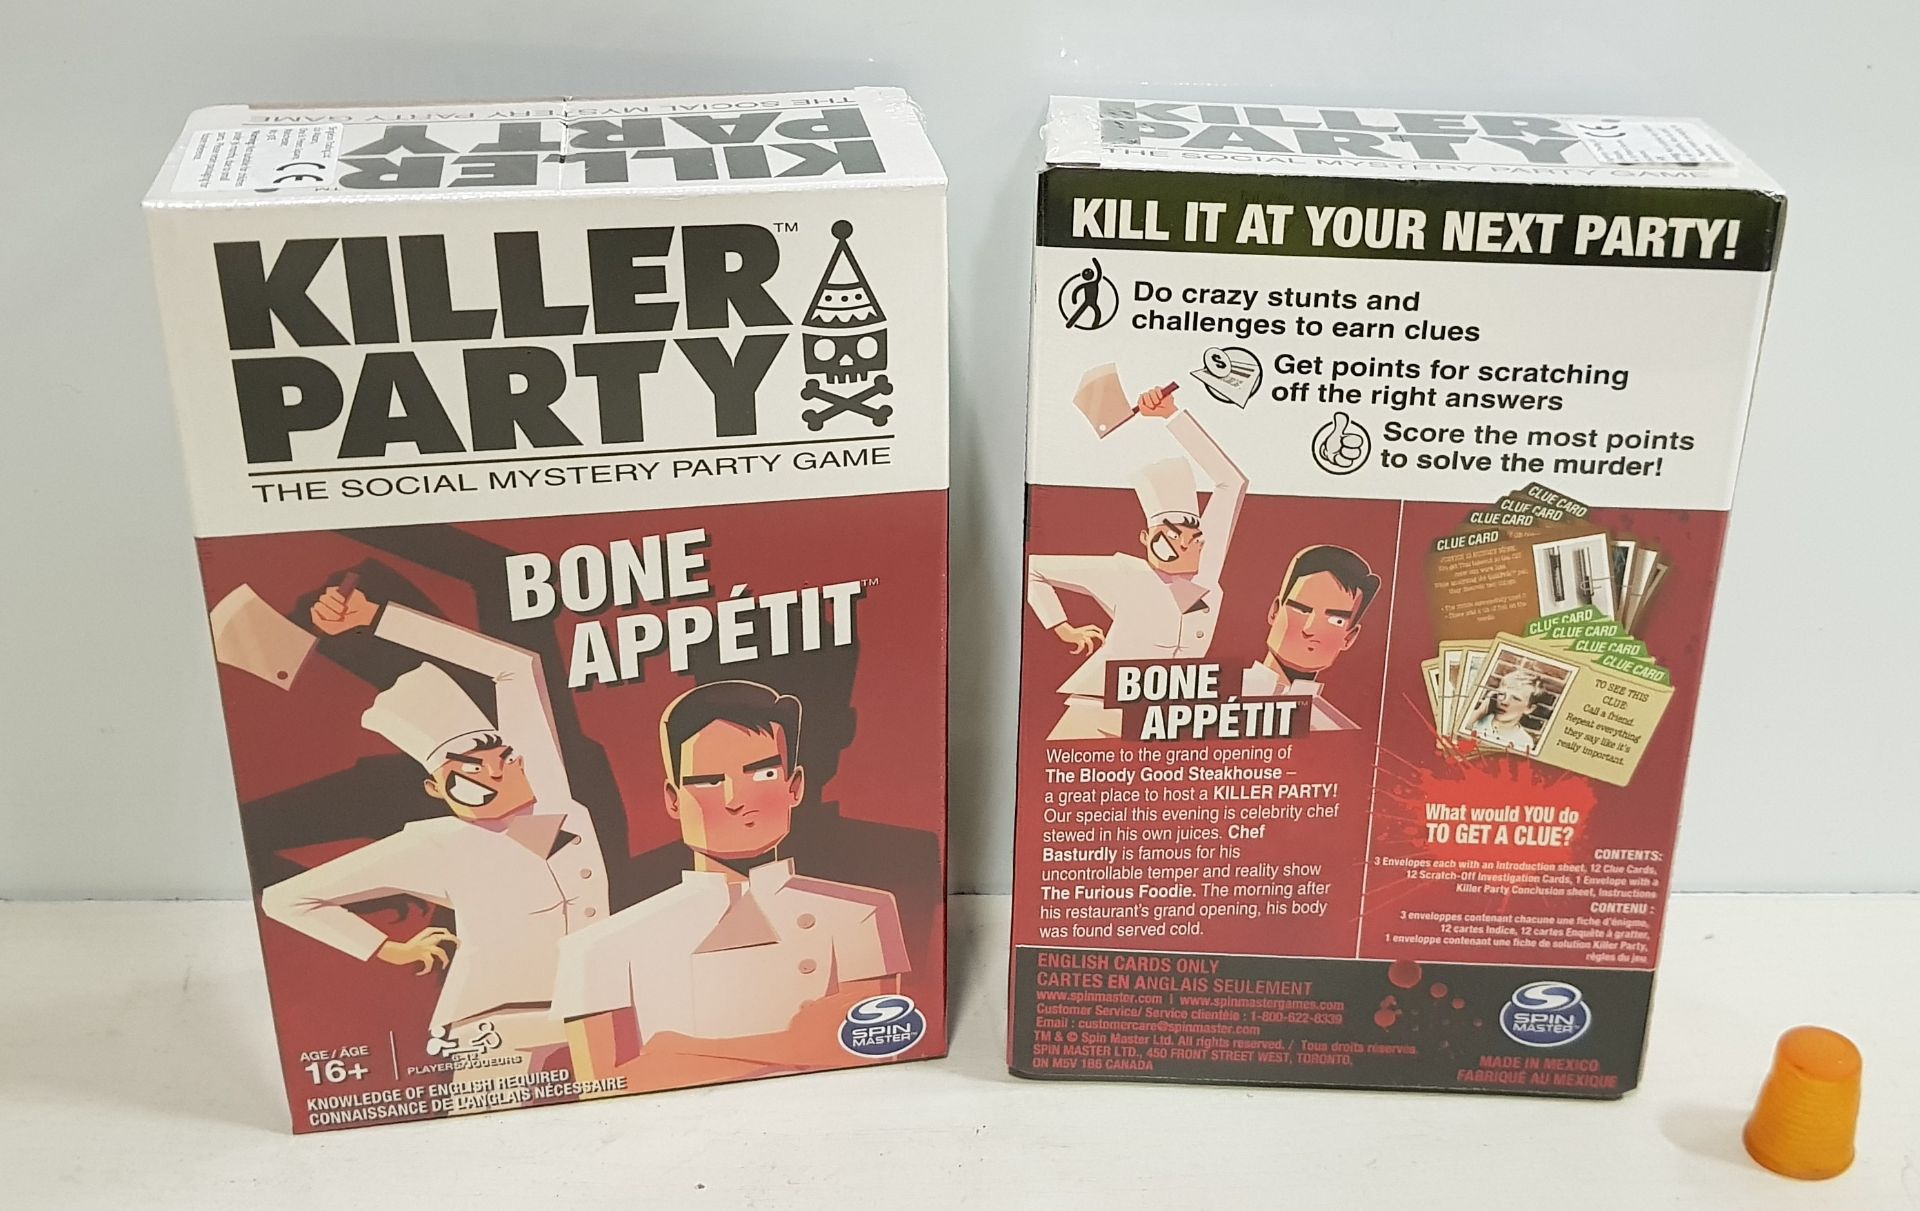 125 X BRAND NEW MURDER MYSTERY KILLER PARTY GAME - BON APPETIT - IN 25 CARTONS